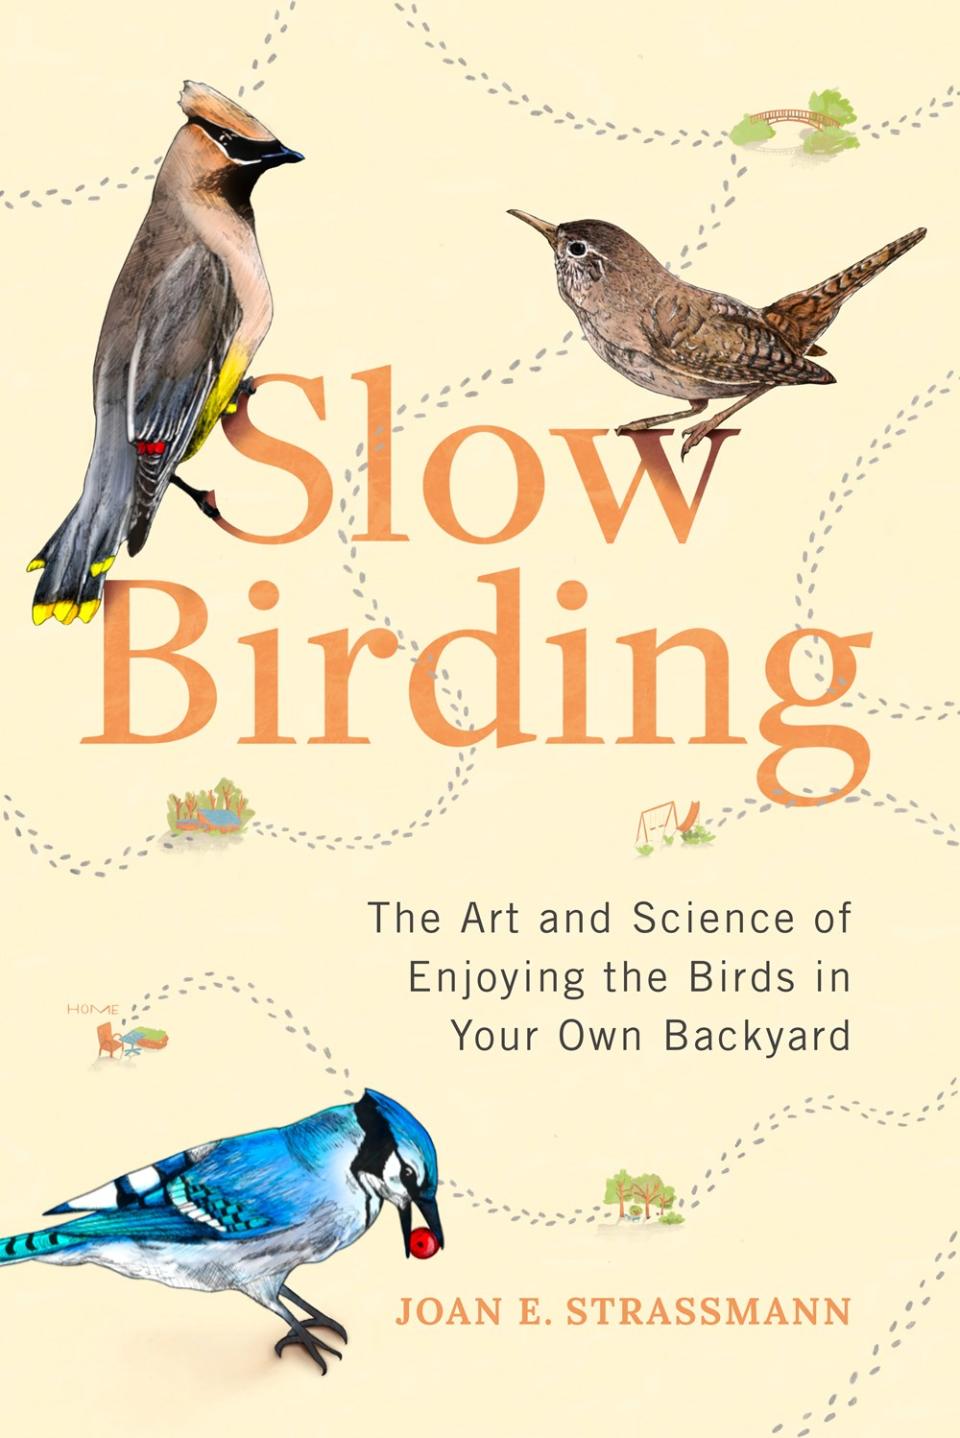 Slow Birding - New Years Resolution Books